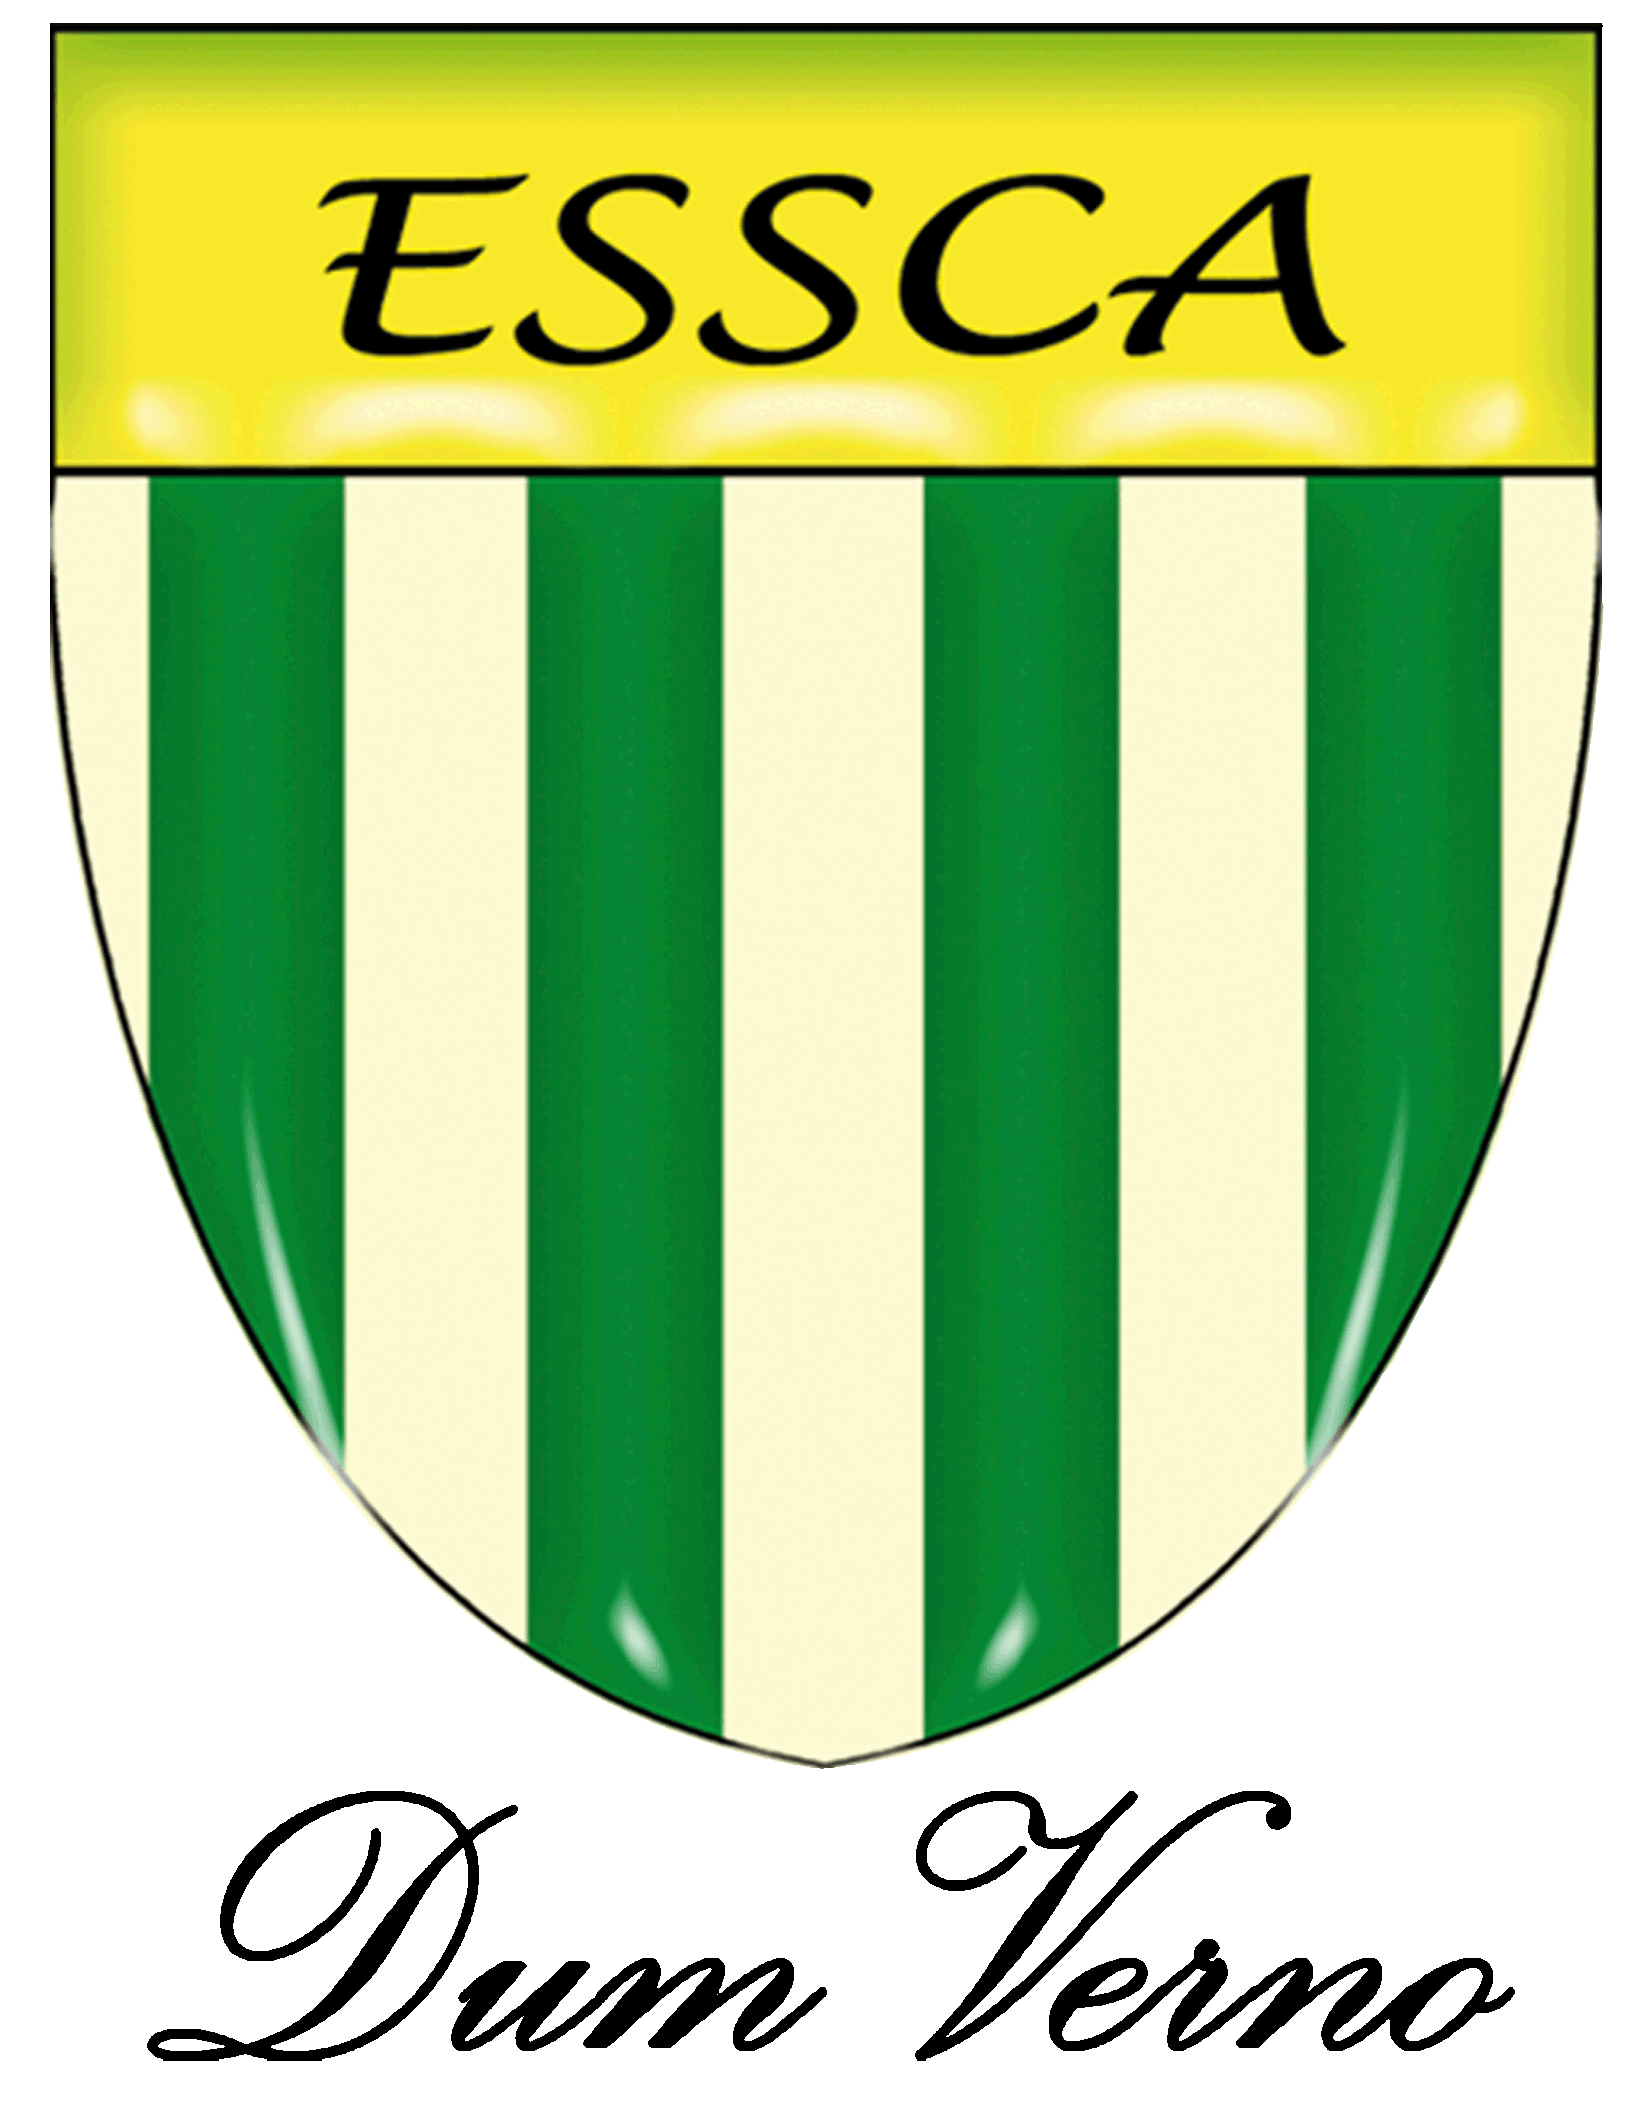 École Supérieure Sacré-Coeur Antanimena - Logo